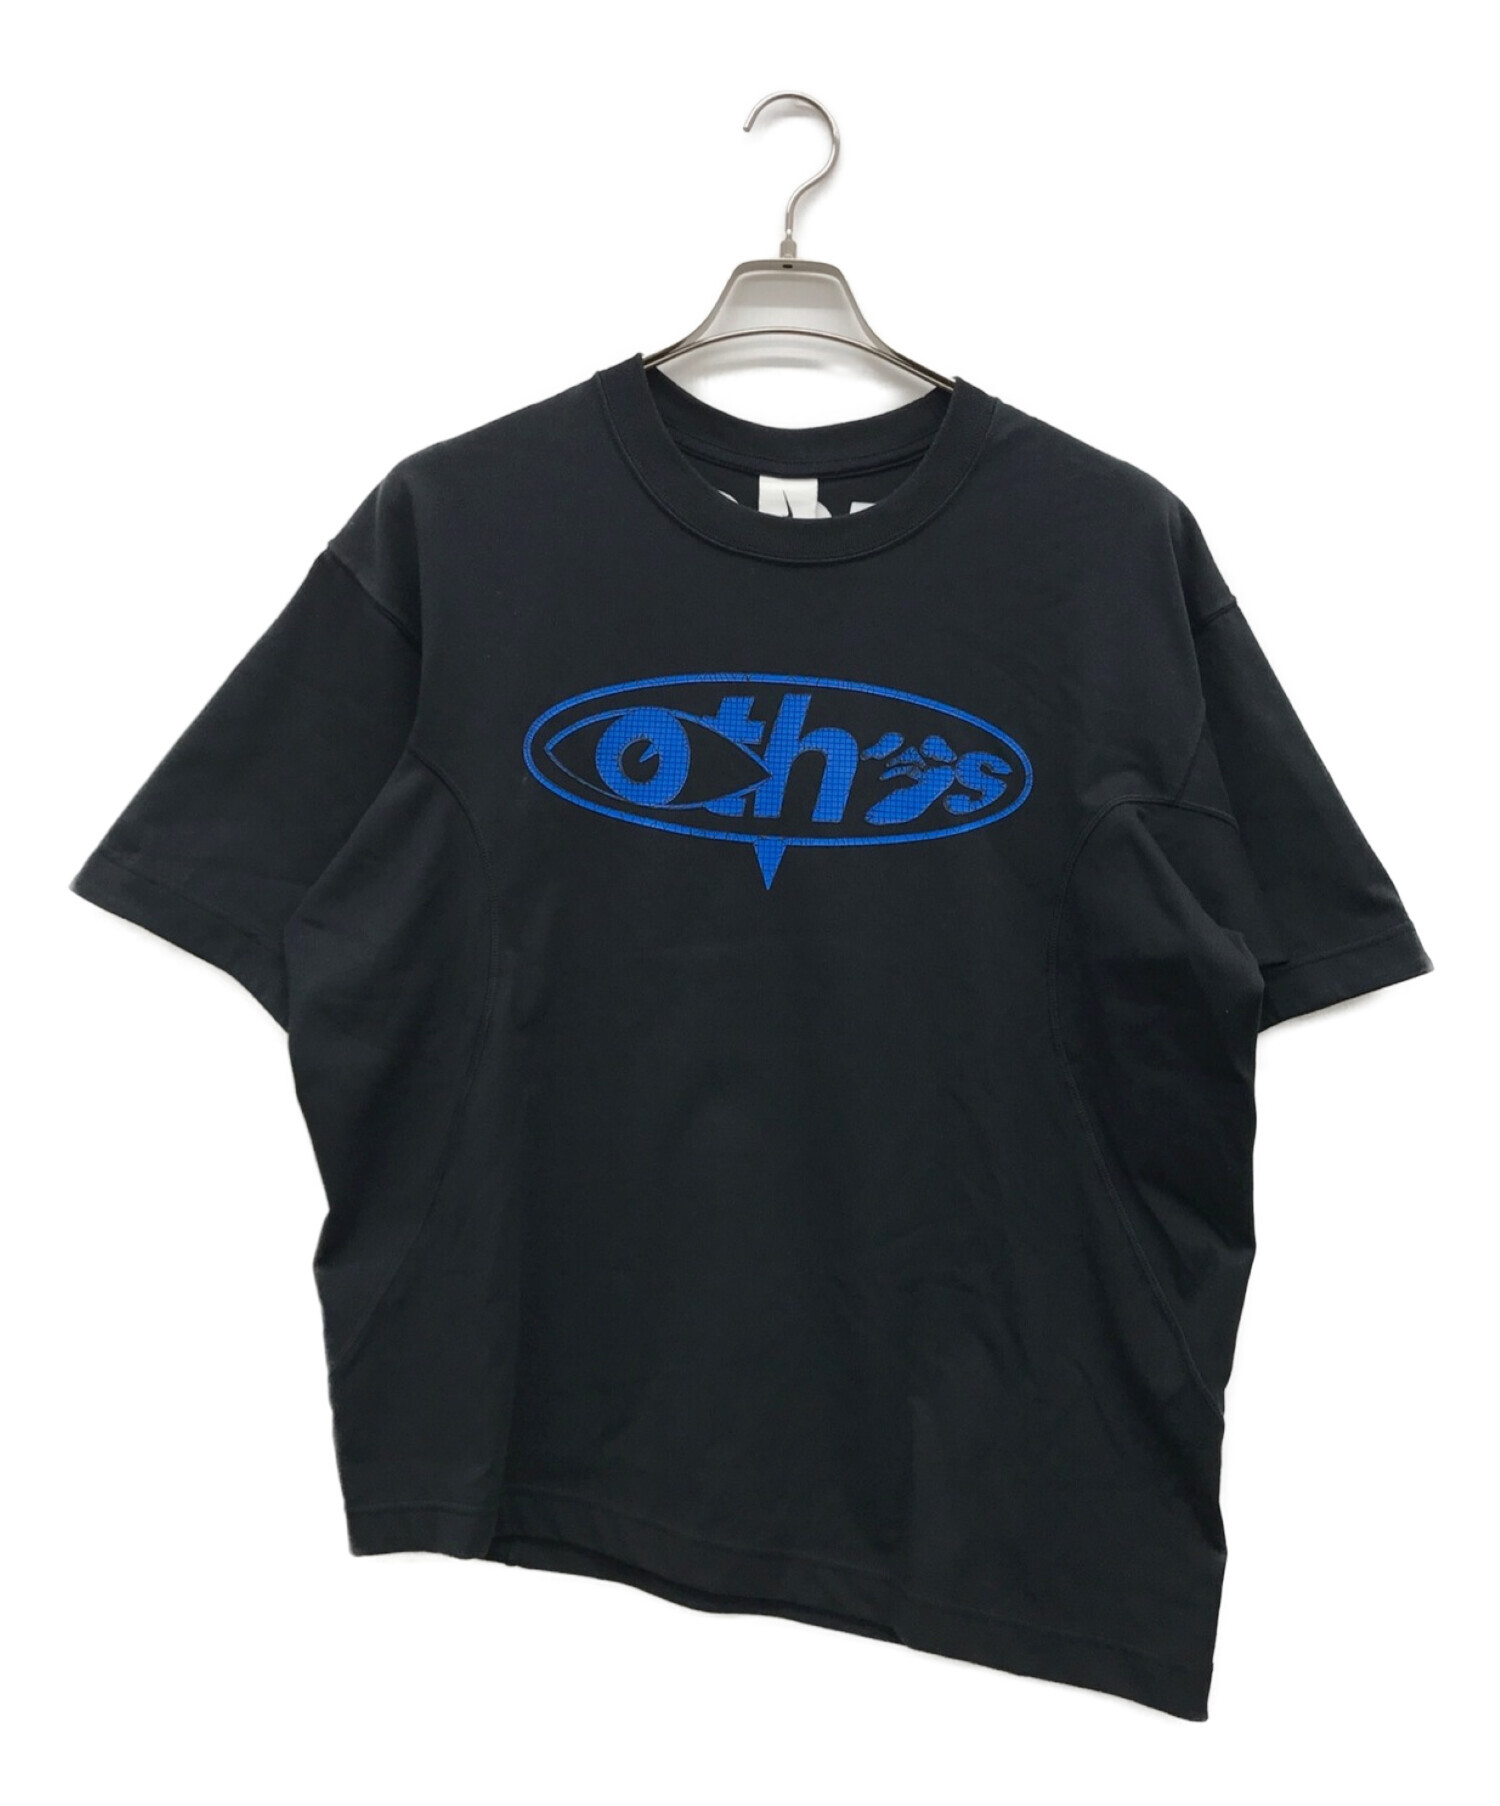 NIKE (ナイキ) OFFWHITE (オフホワイト) Tシャツ ブラック サイズ:M